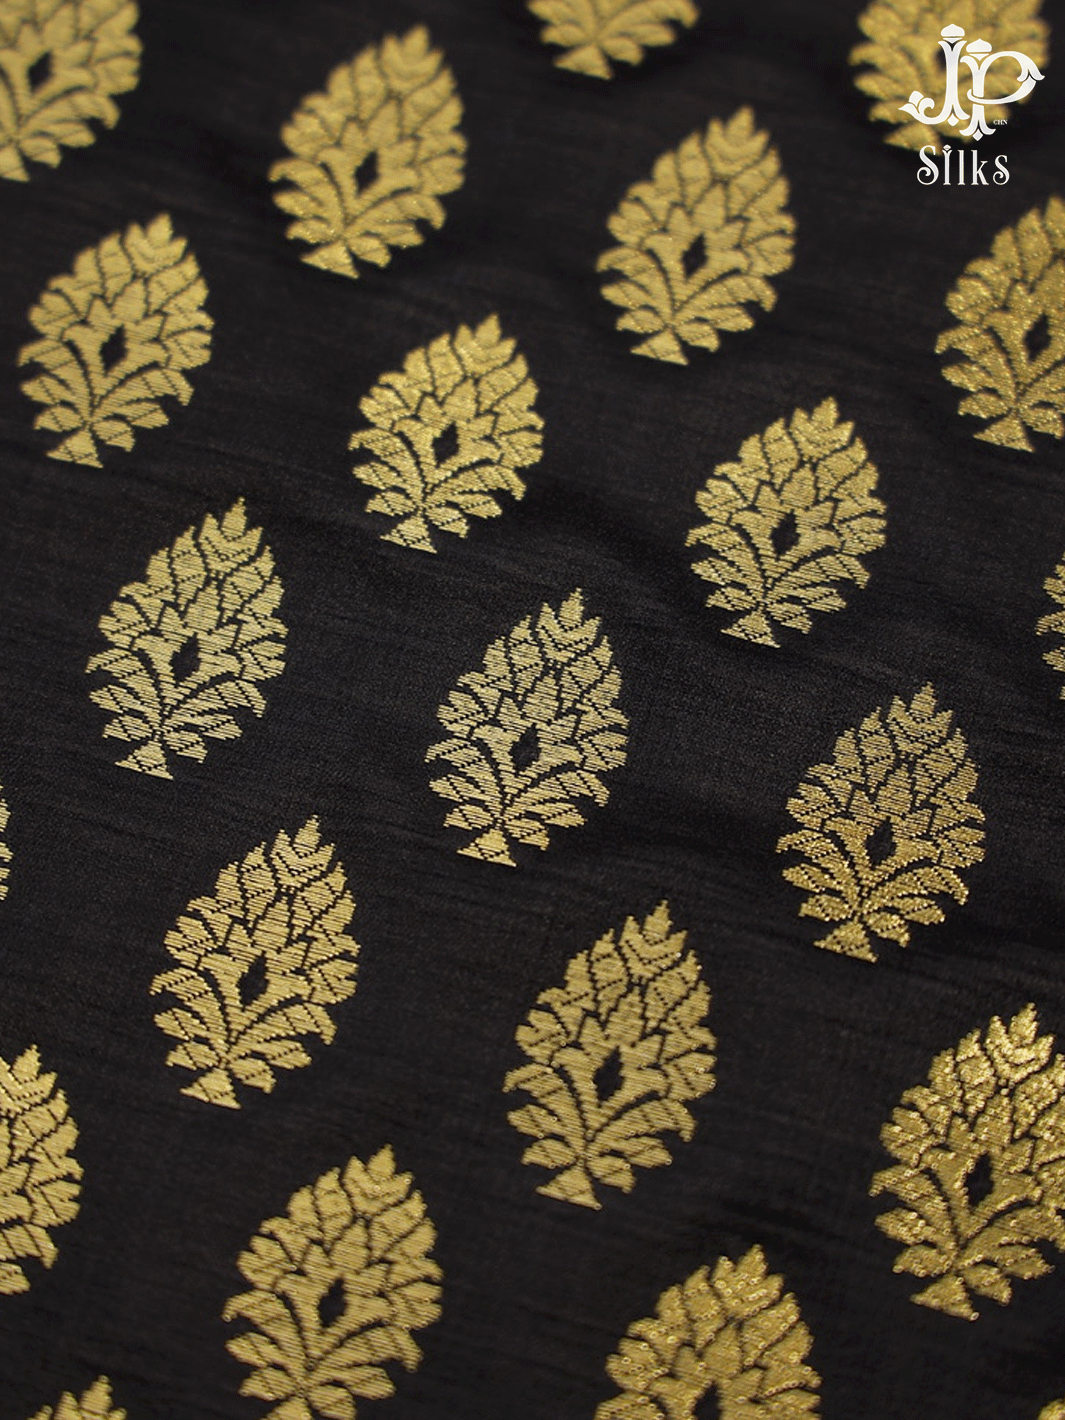 Black Banarasi Brocade Fabric - C845 - View 3